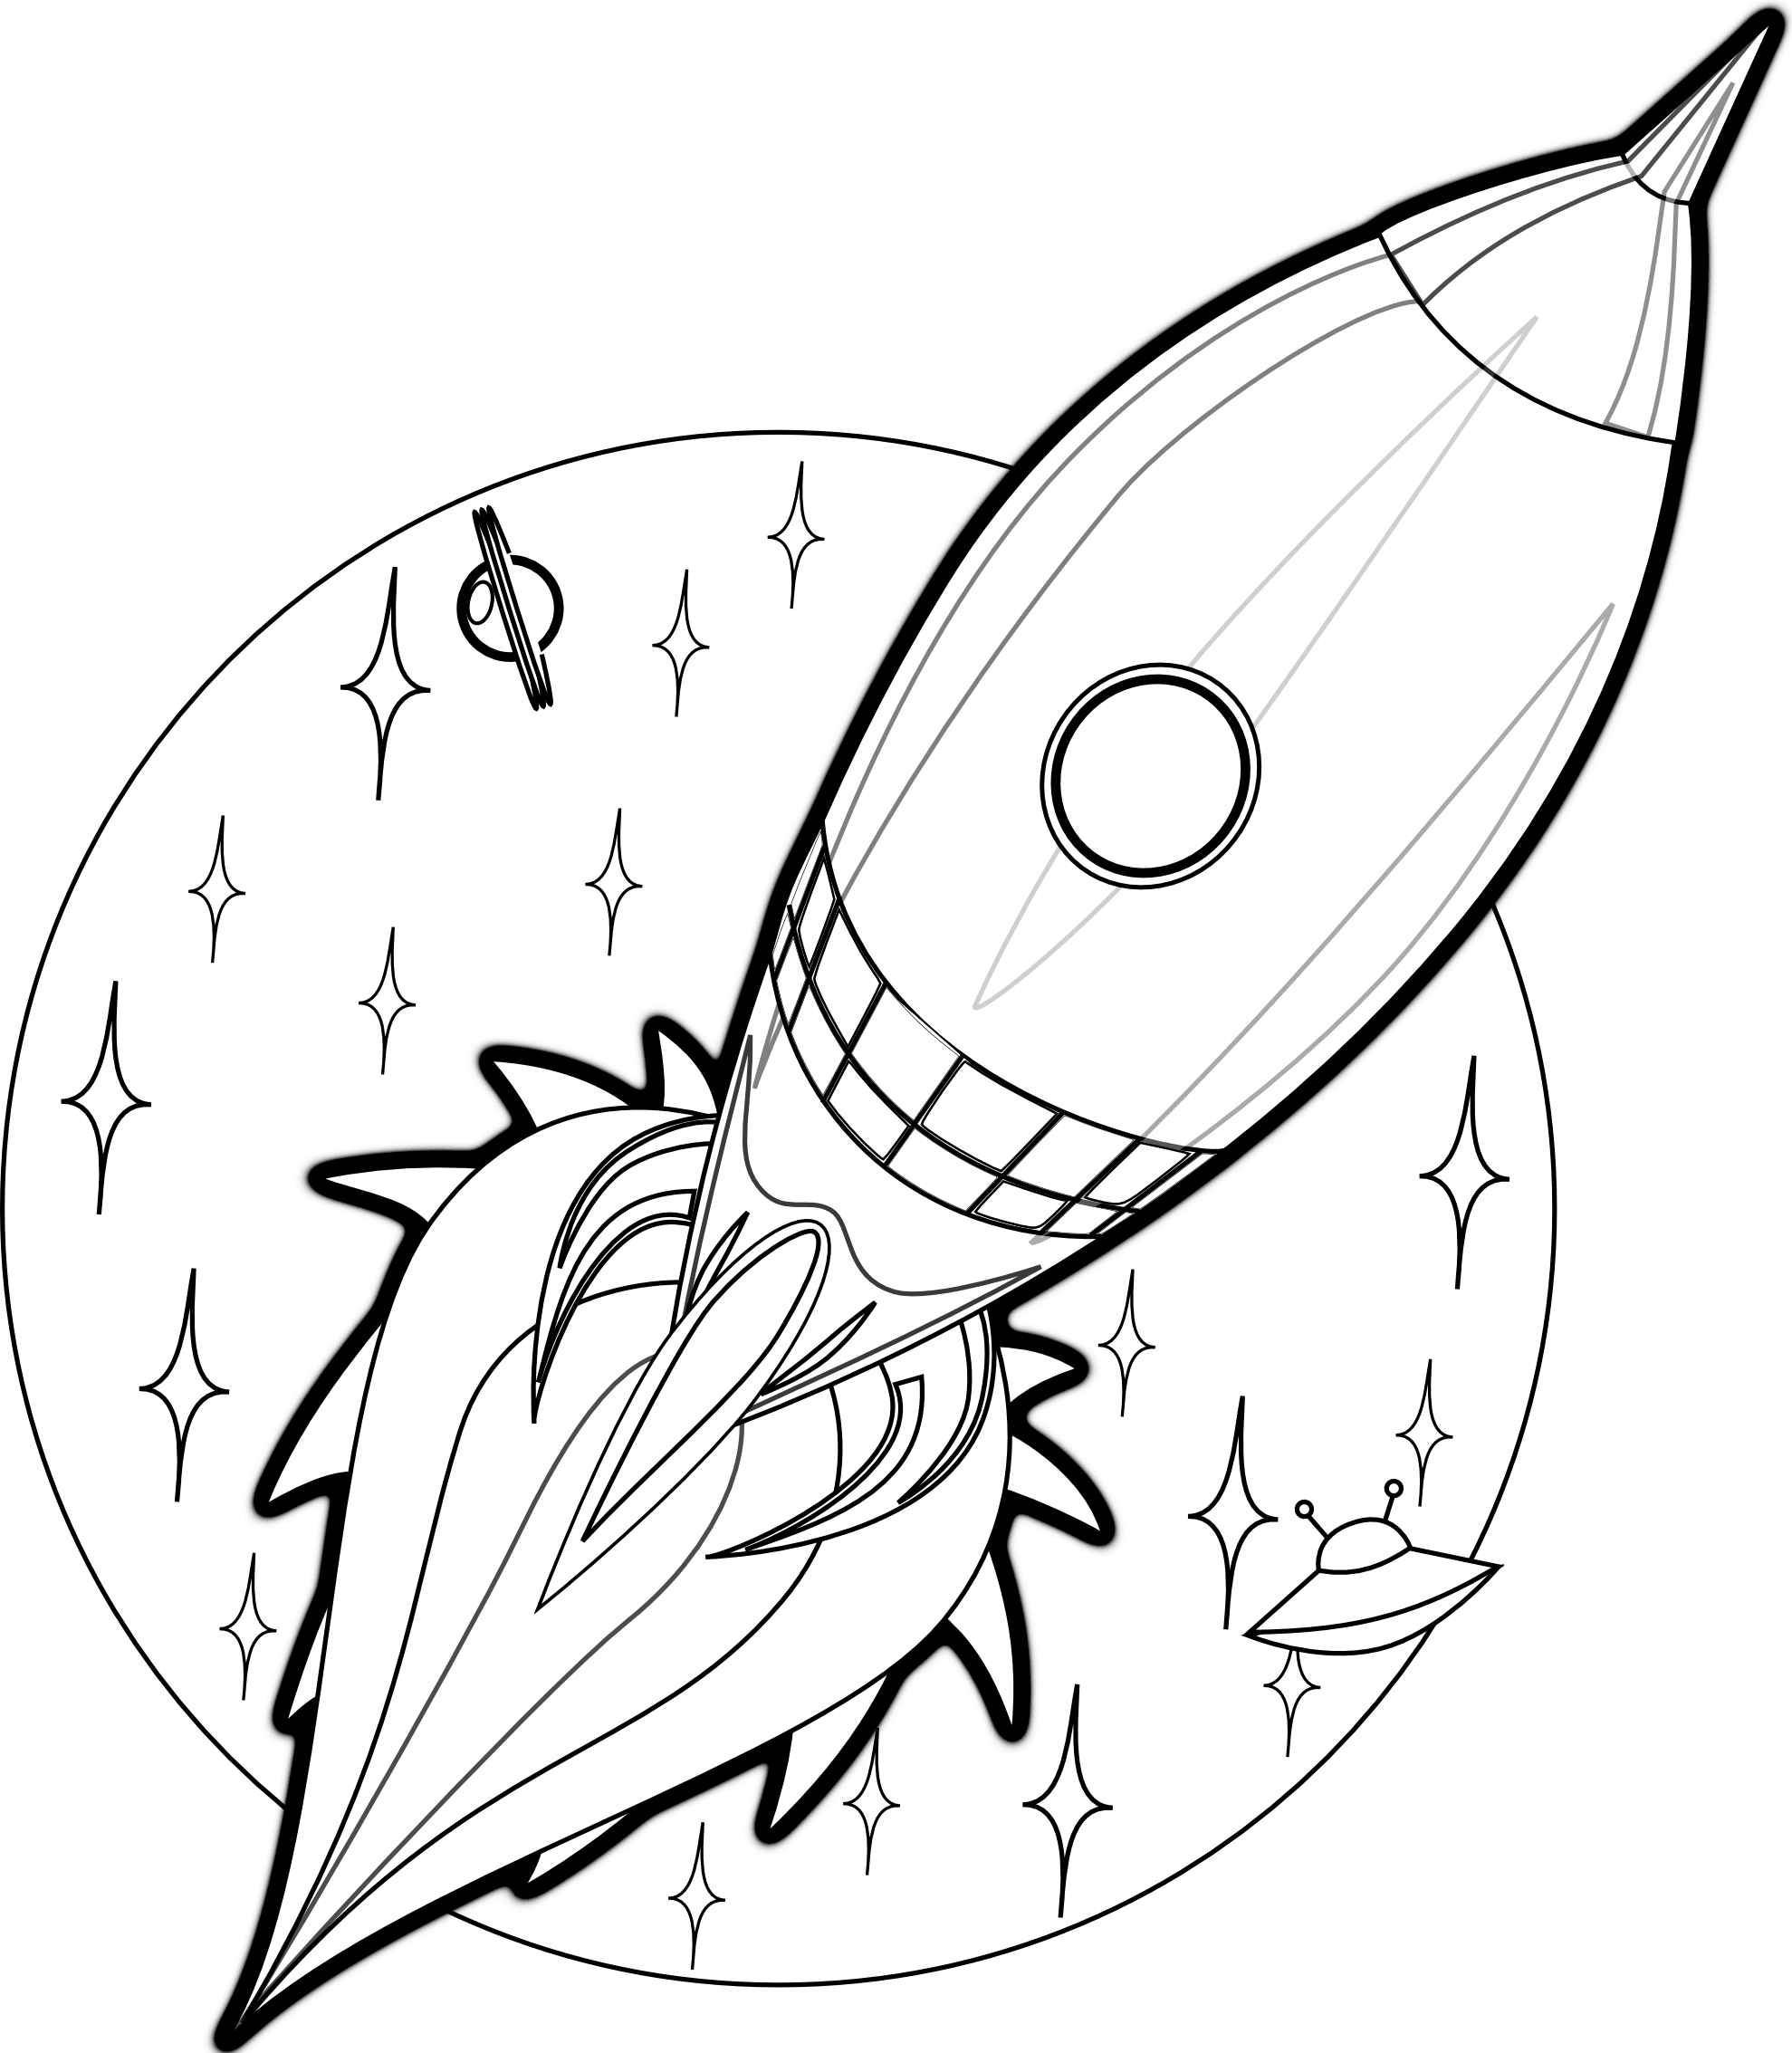 Free printable rocket ship coloring pages for kids space coloring pages coloring pages for teenagers printable rocket ship